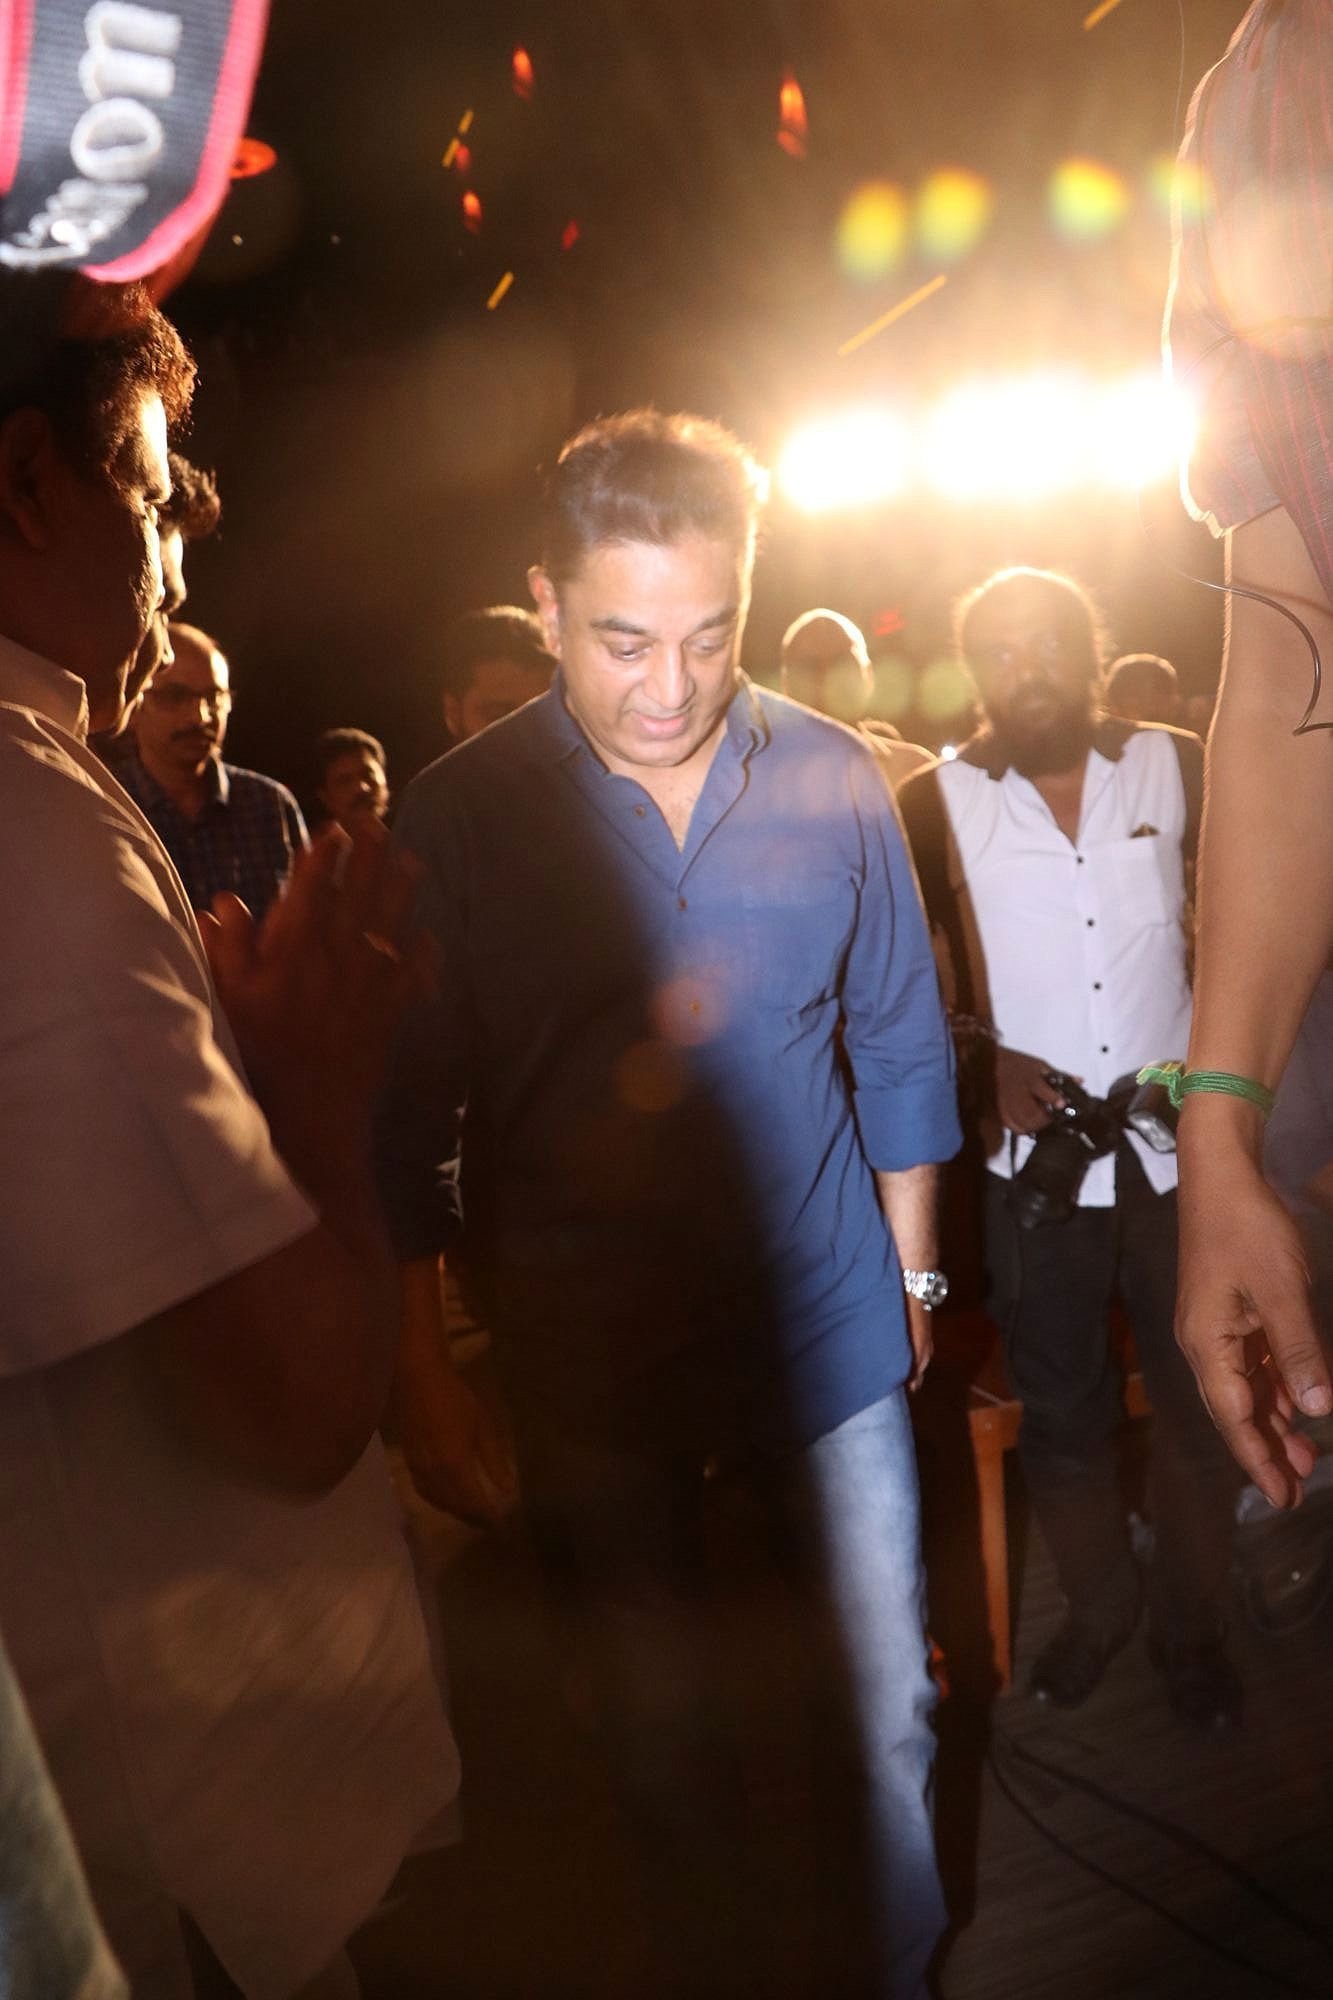 Kamal Haasan - Sangili Bungili Kadhava Thorae Movie Audio Launch Photos | Picture 1495099